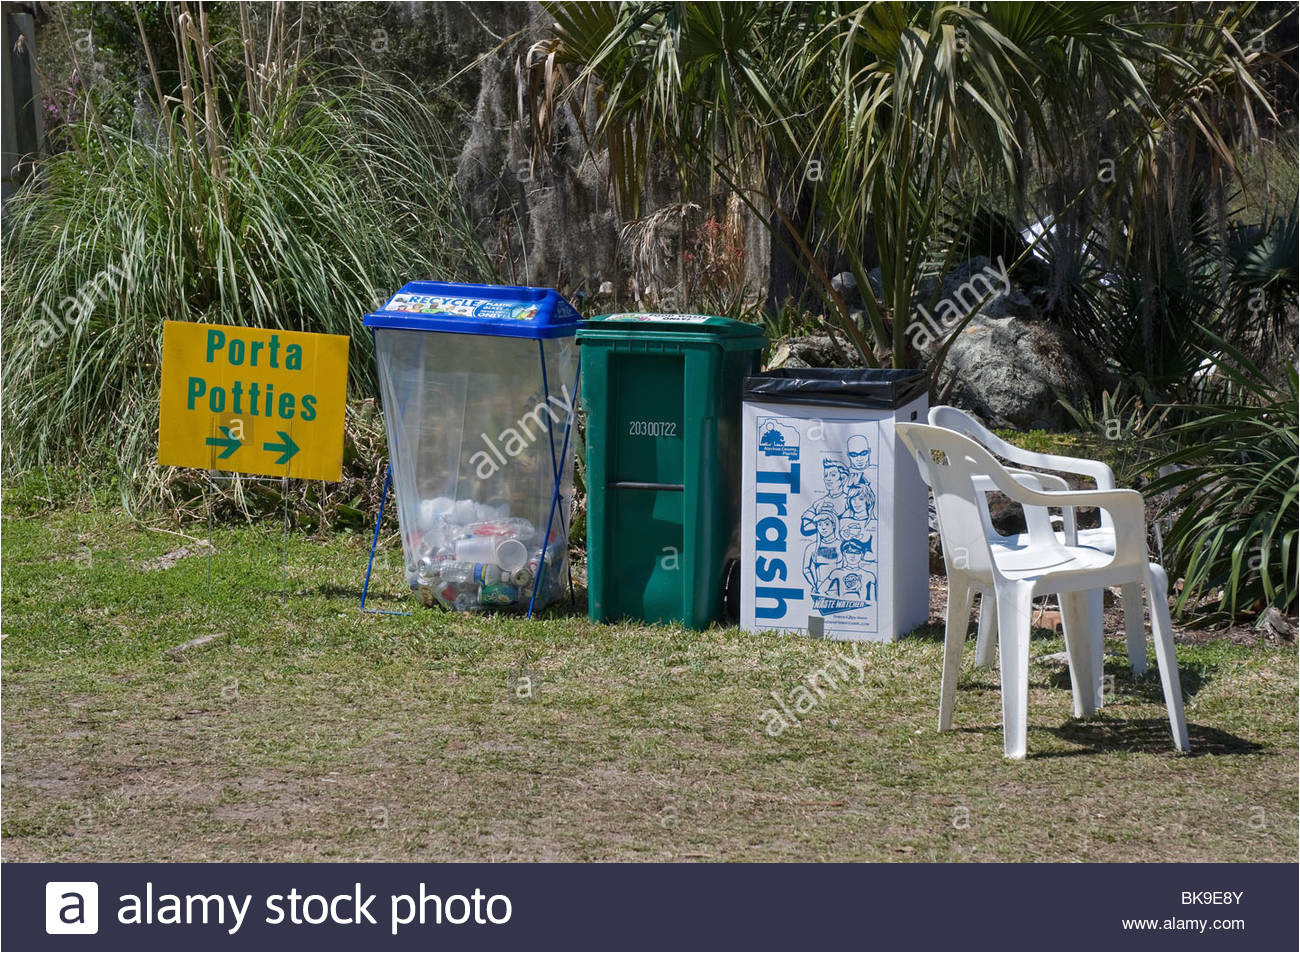 kanapaha spring garden festival gainesville florida trash and recycling bins porta potty sign stock image